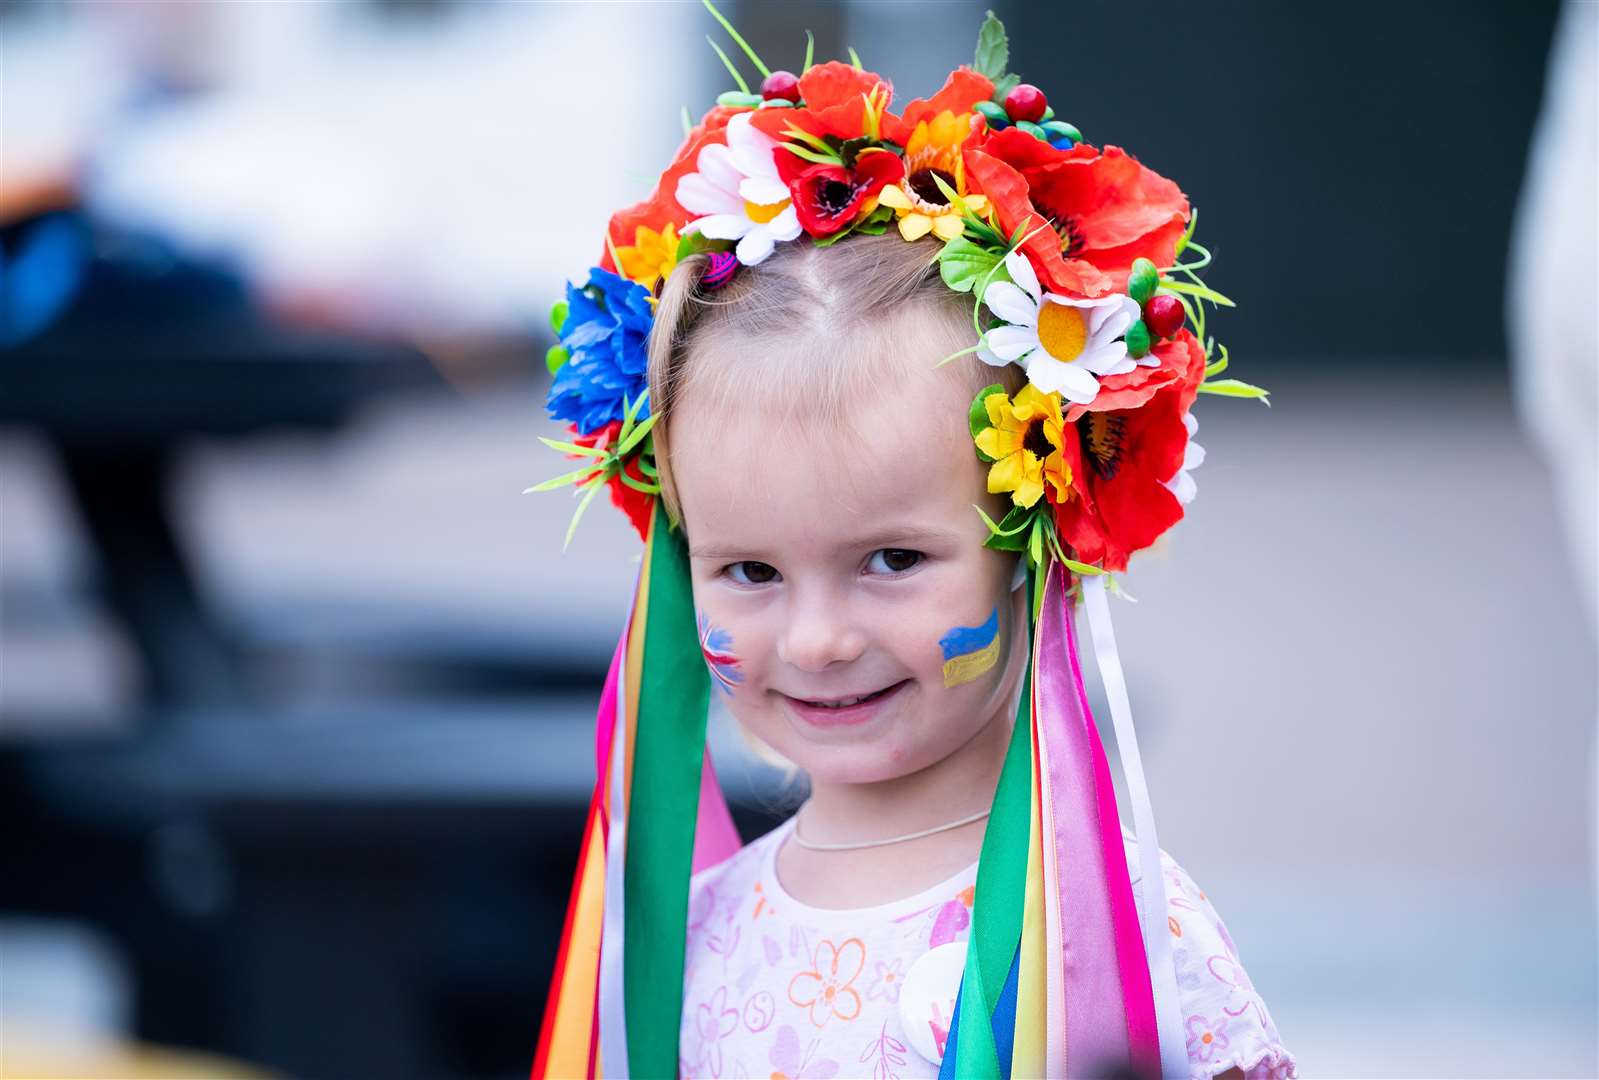 Flower crowns were made and worn by children. Picture: Ian Burt